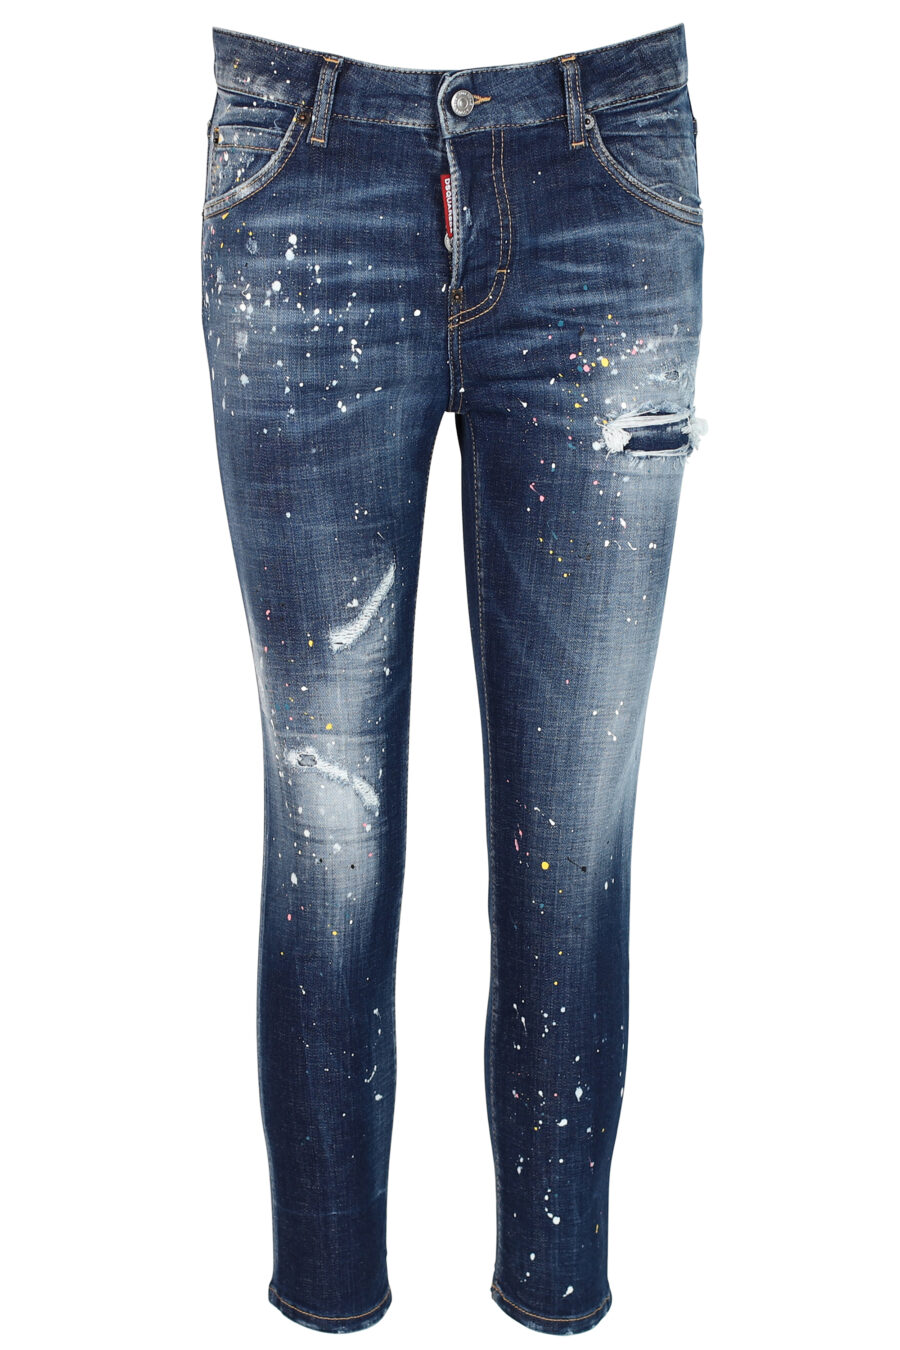 Cool girl cropped jean trousers "Cool girl cropped jean" blau mit Rissen getragen - 8052134942512